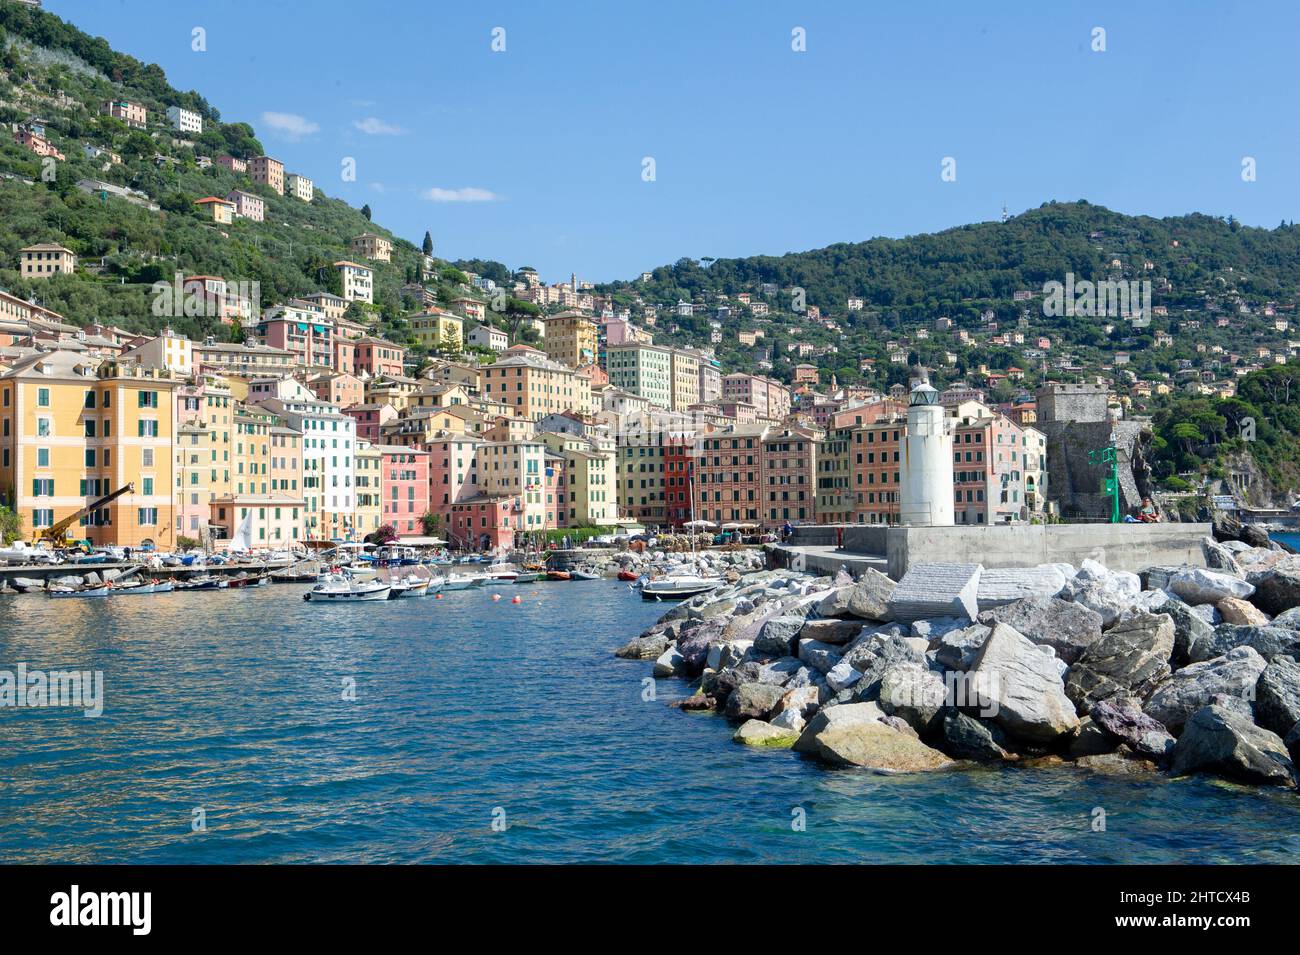 Europe, Italy, City of Camogli on the Mediterranean sea in Liguria. Harbor with fisherman boats Stock Photo